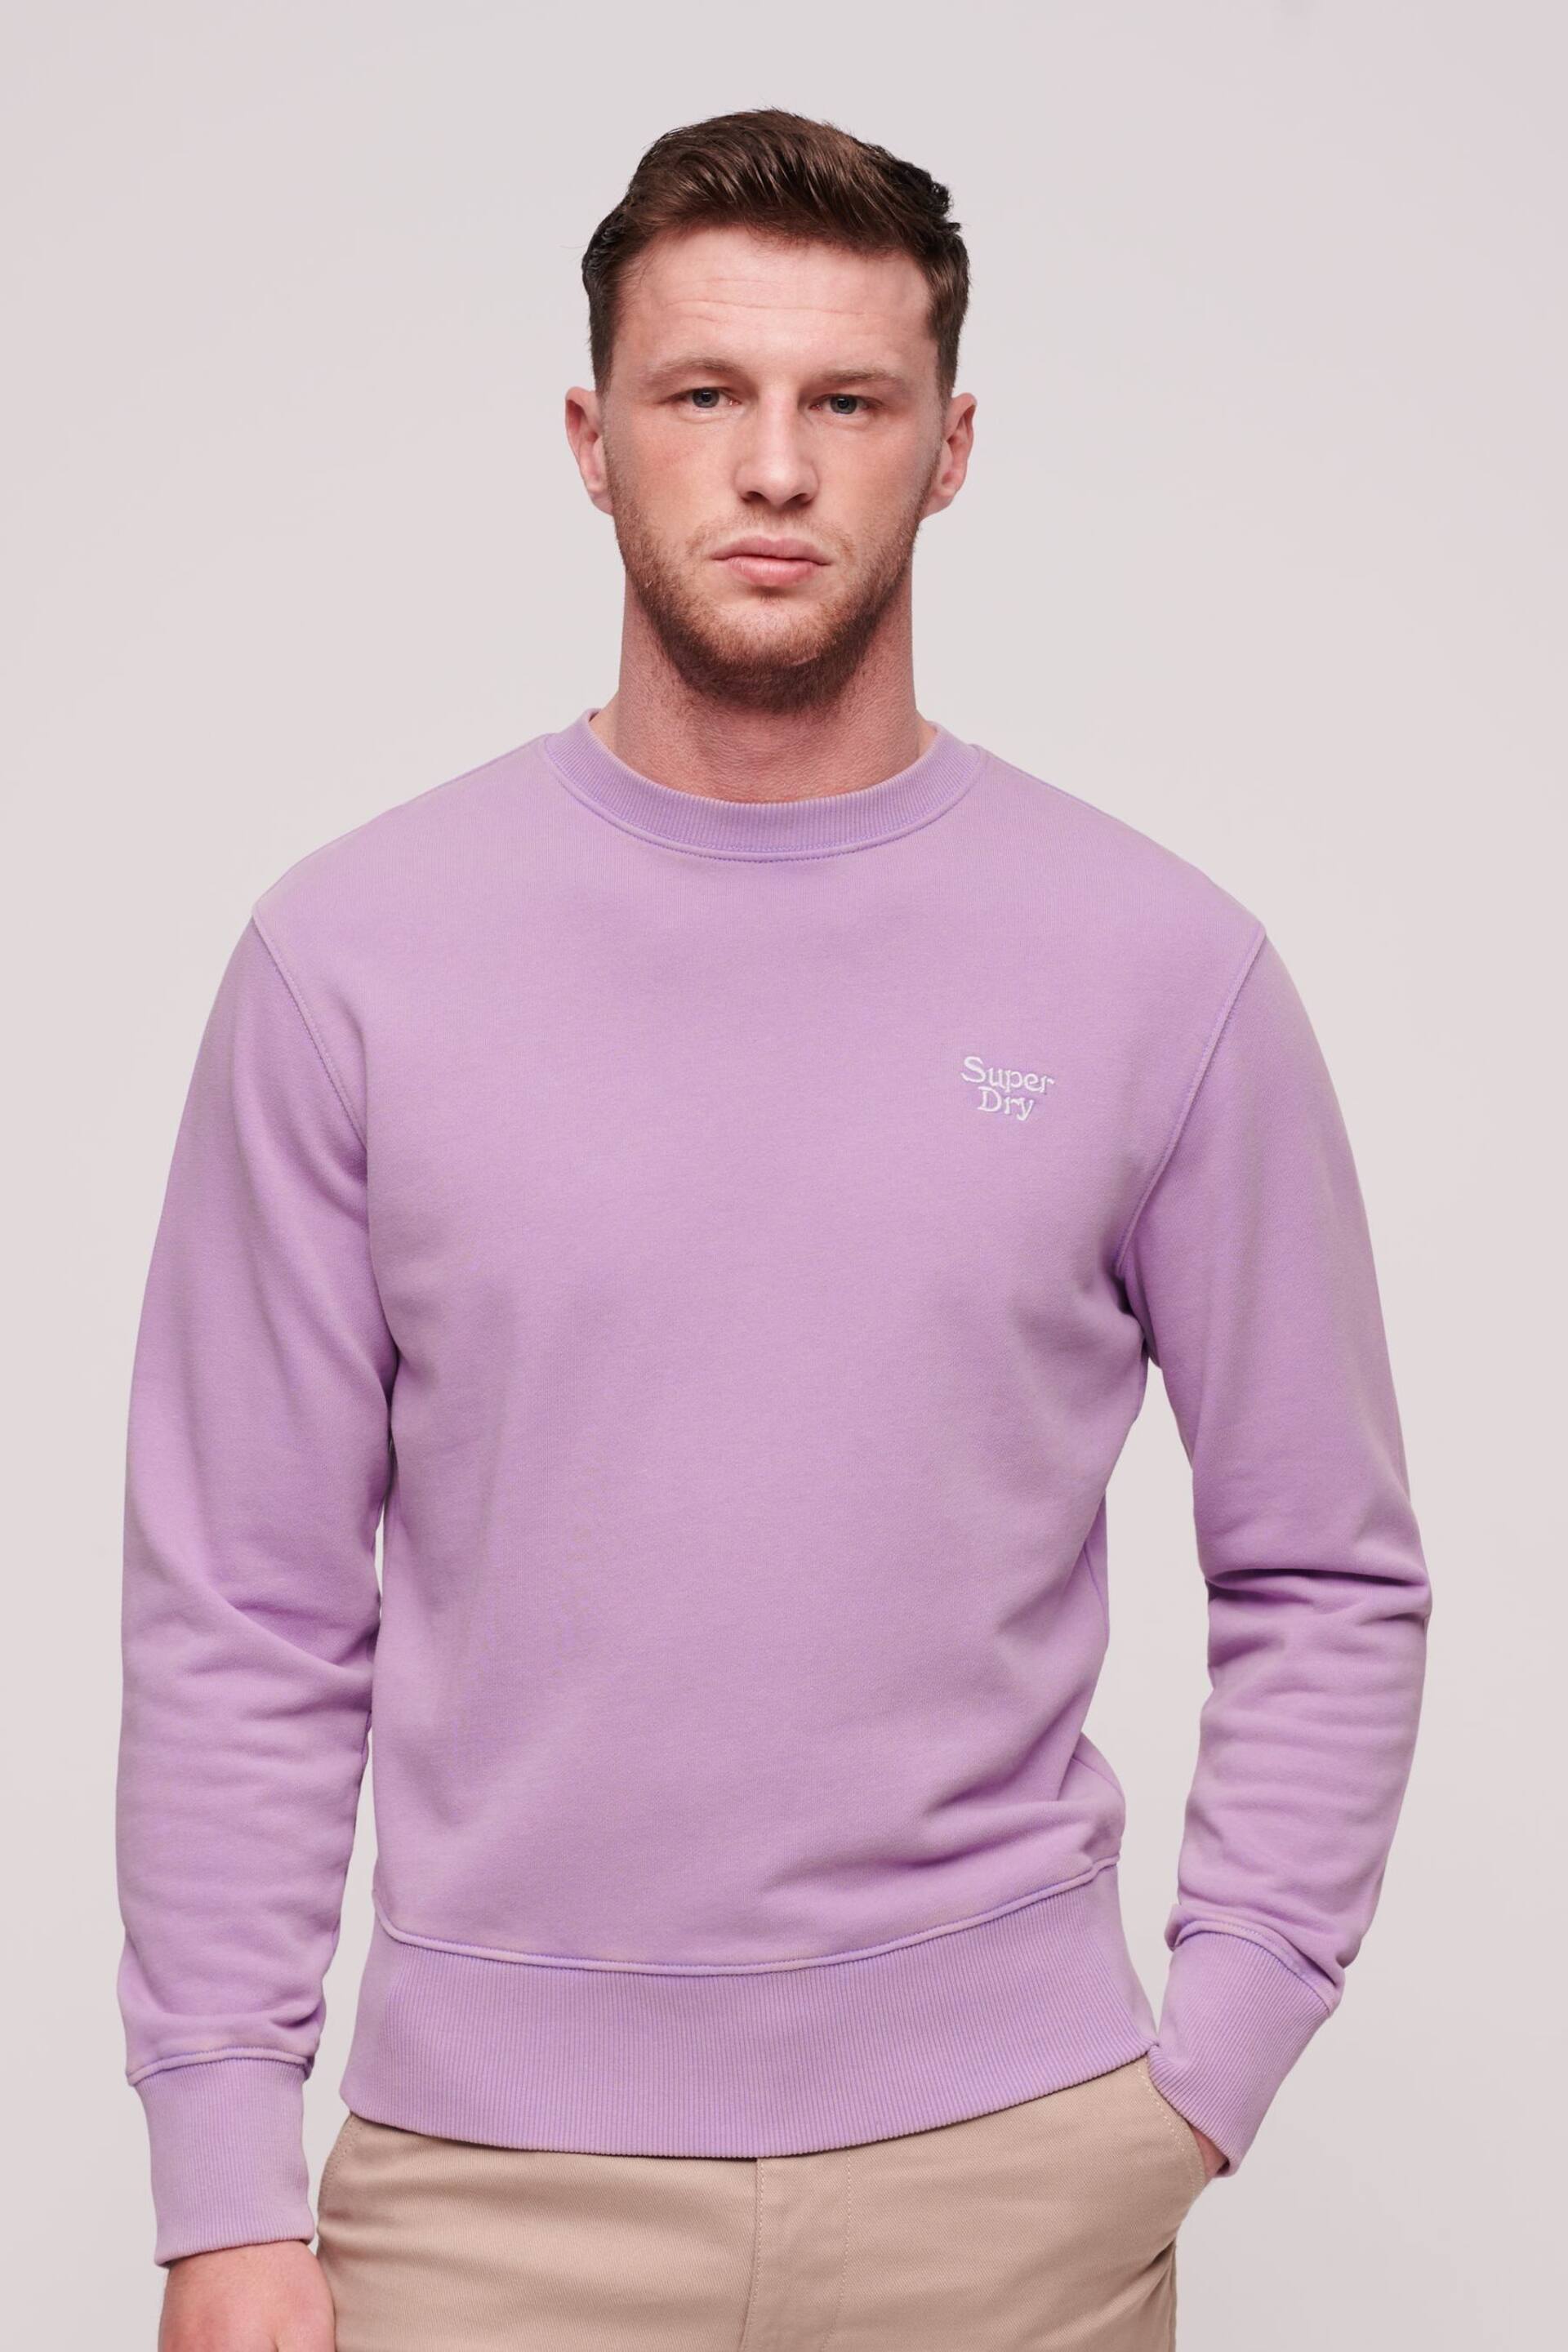 Superdry Purple Vintage Washed Sweatshirt - Image 1 of 3